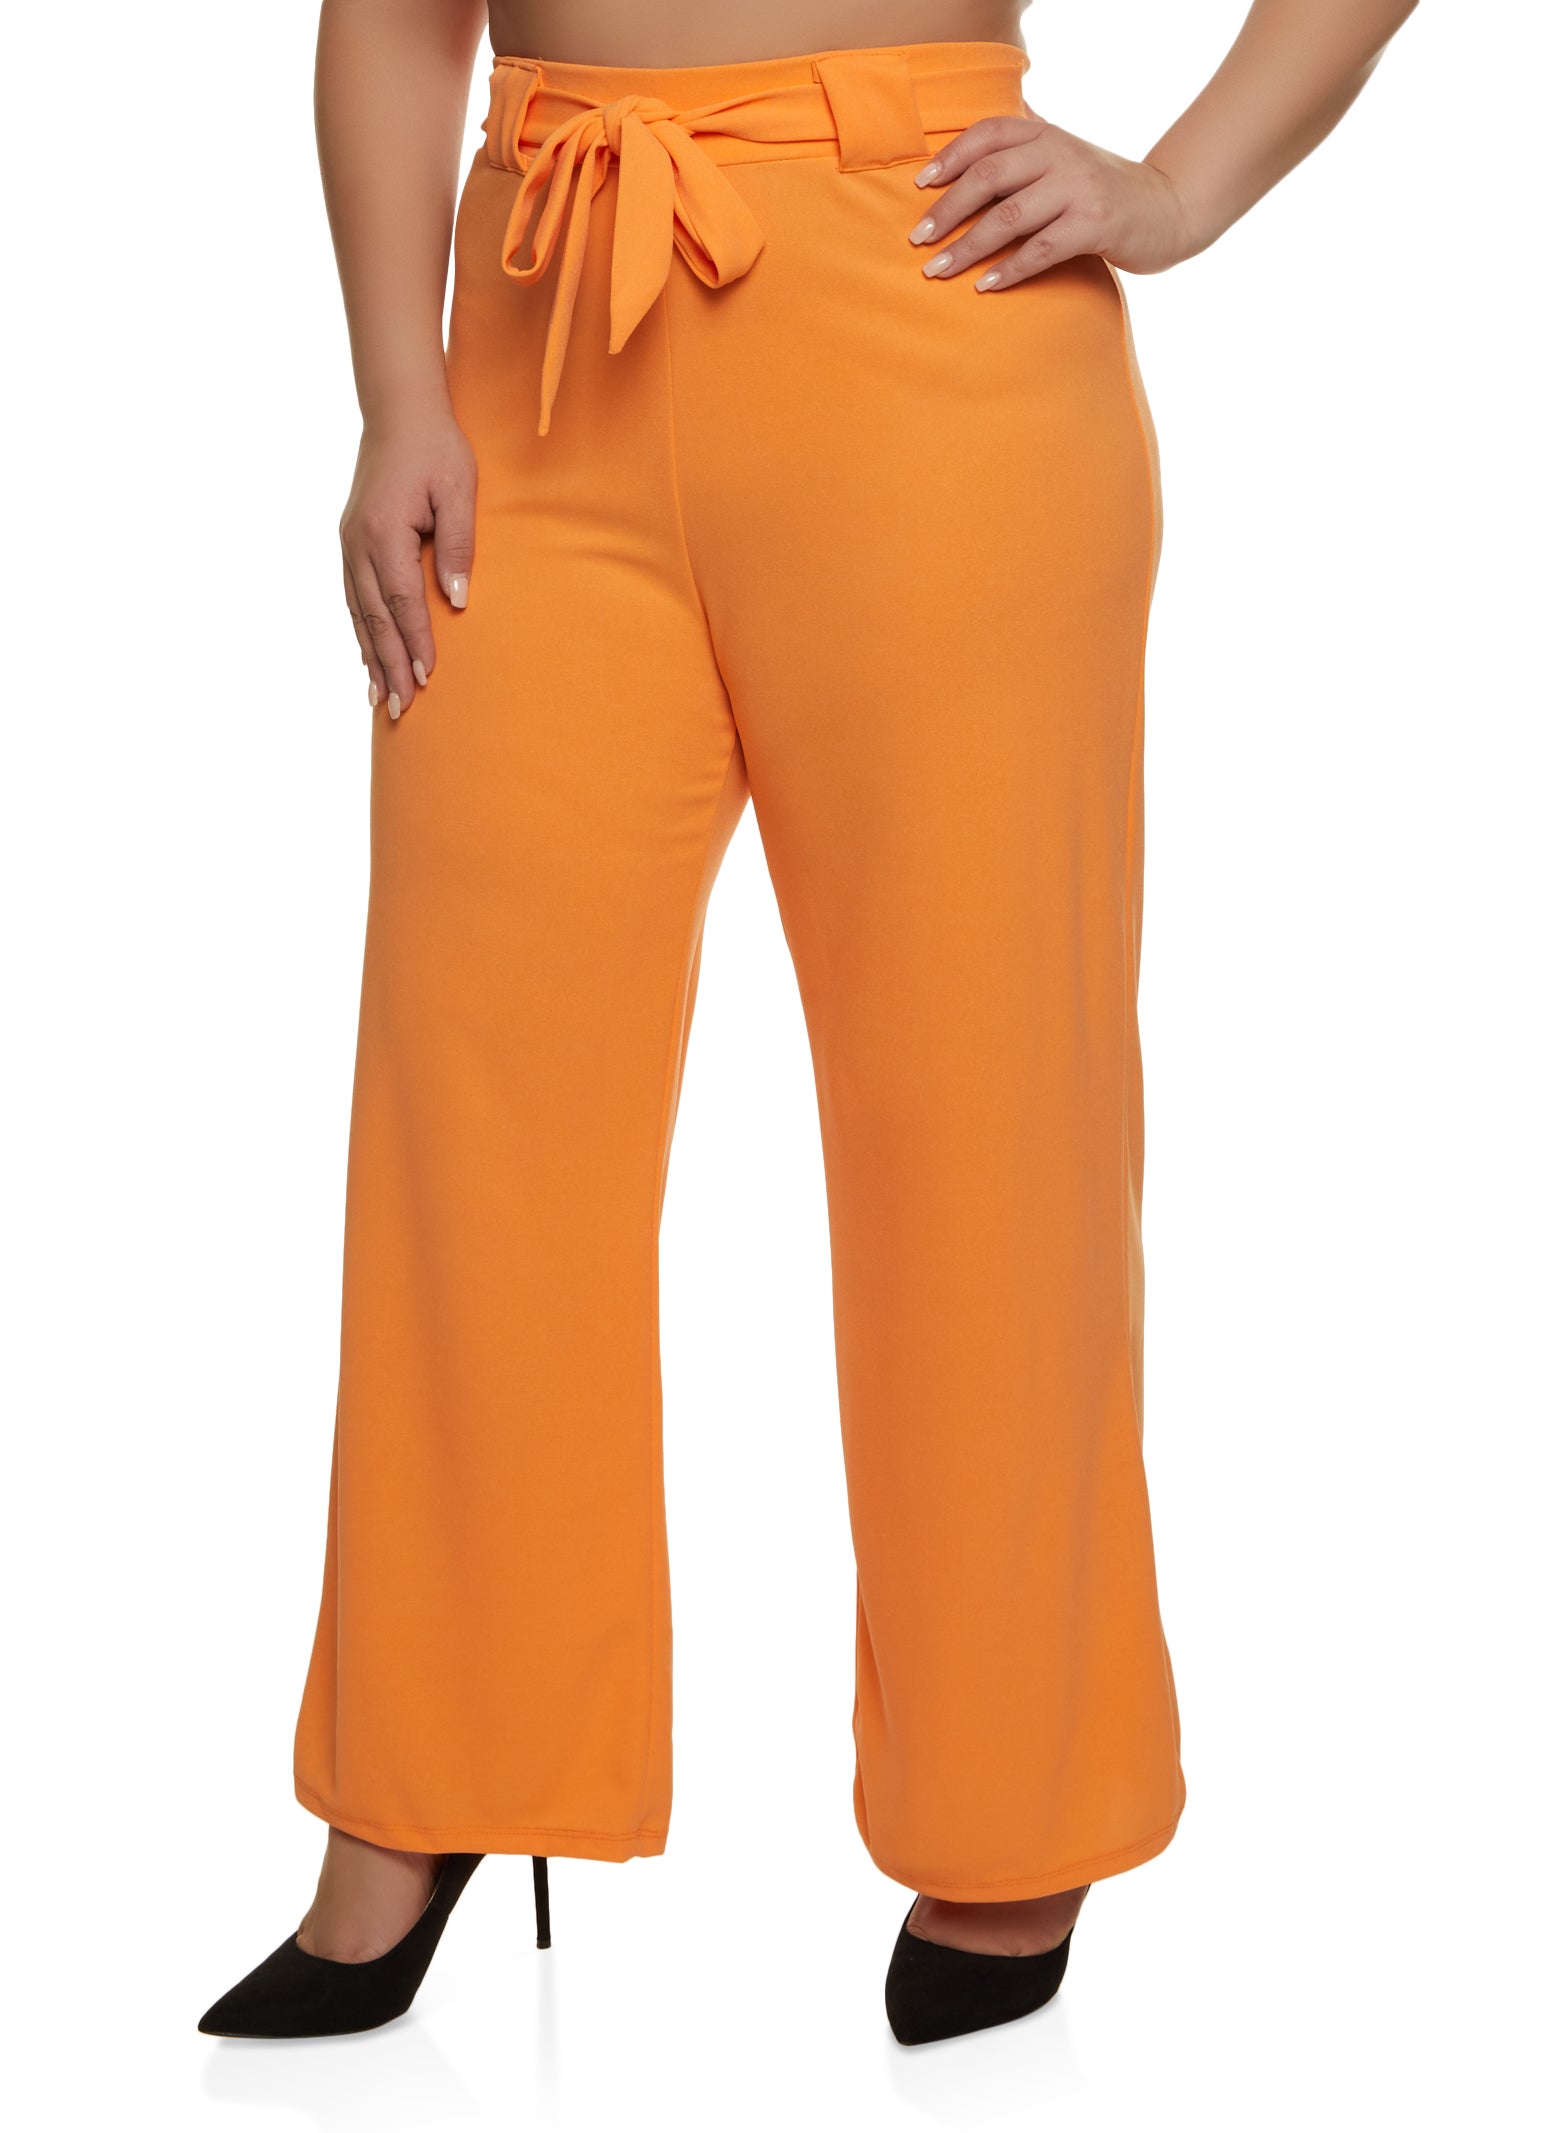 Knit Pintuck Pant in Hot Orange